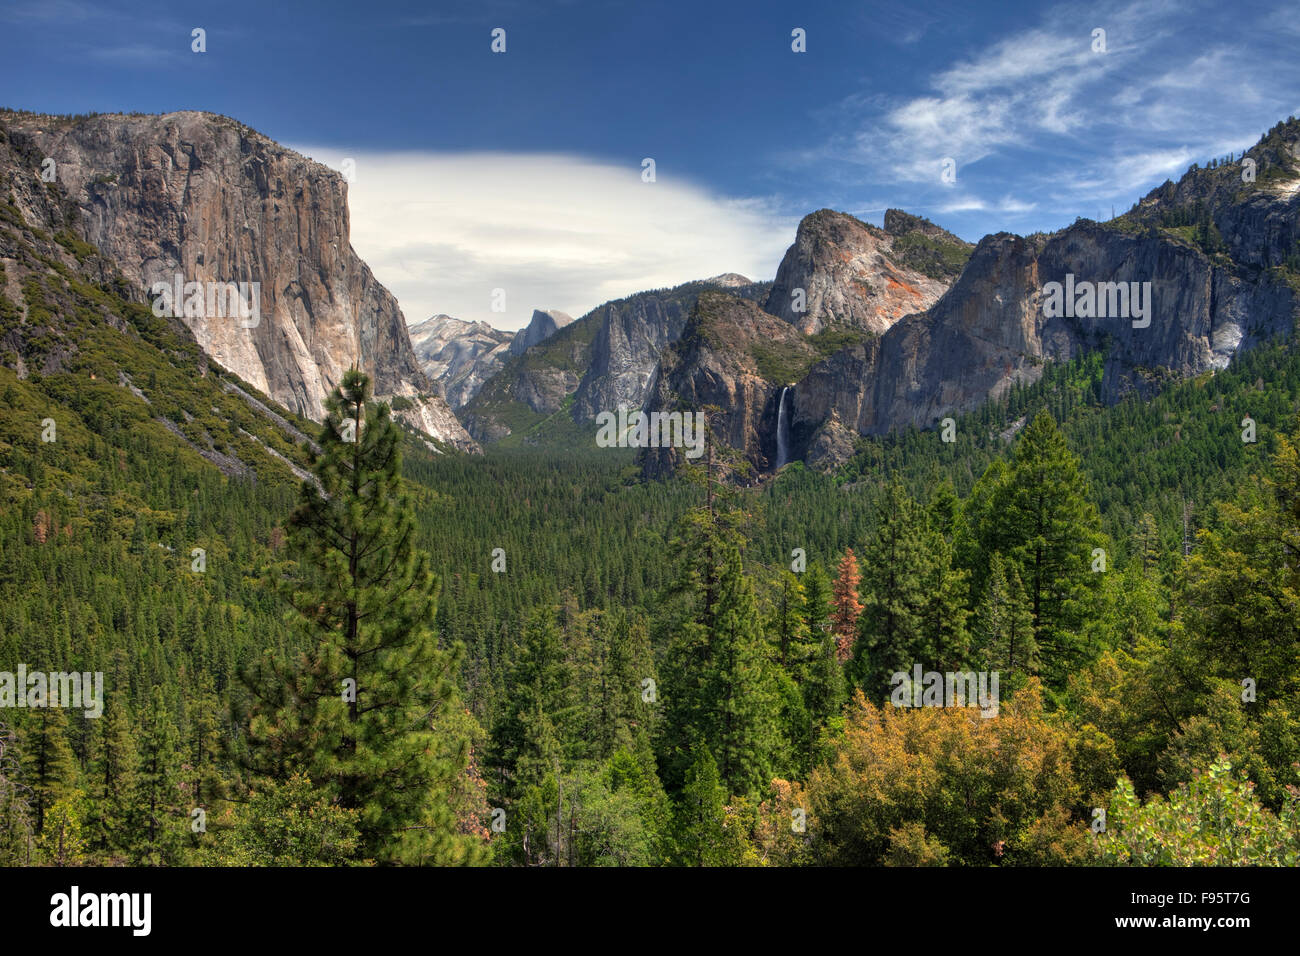 Yosemite National Park, Californie USA Banque D'Images